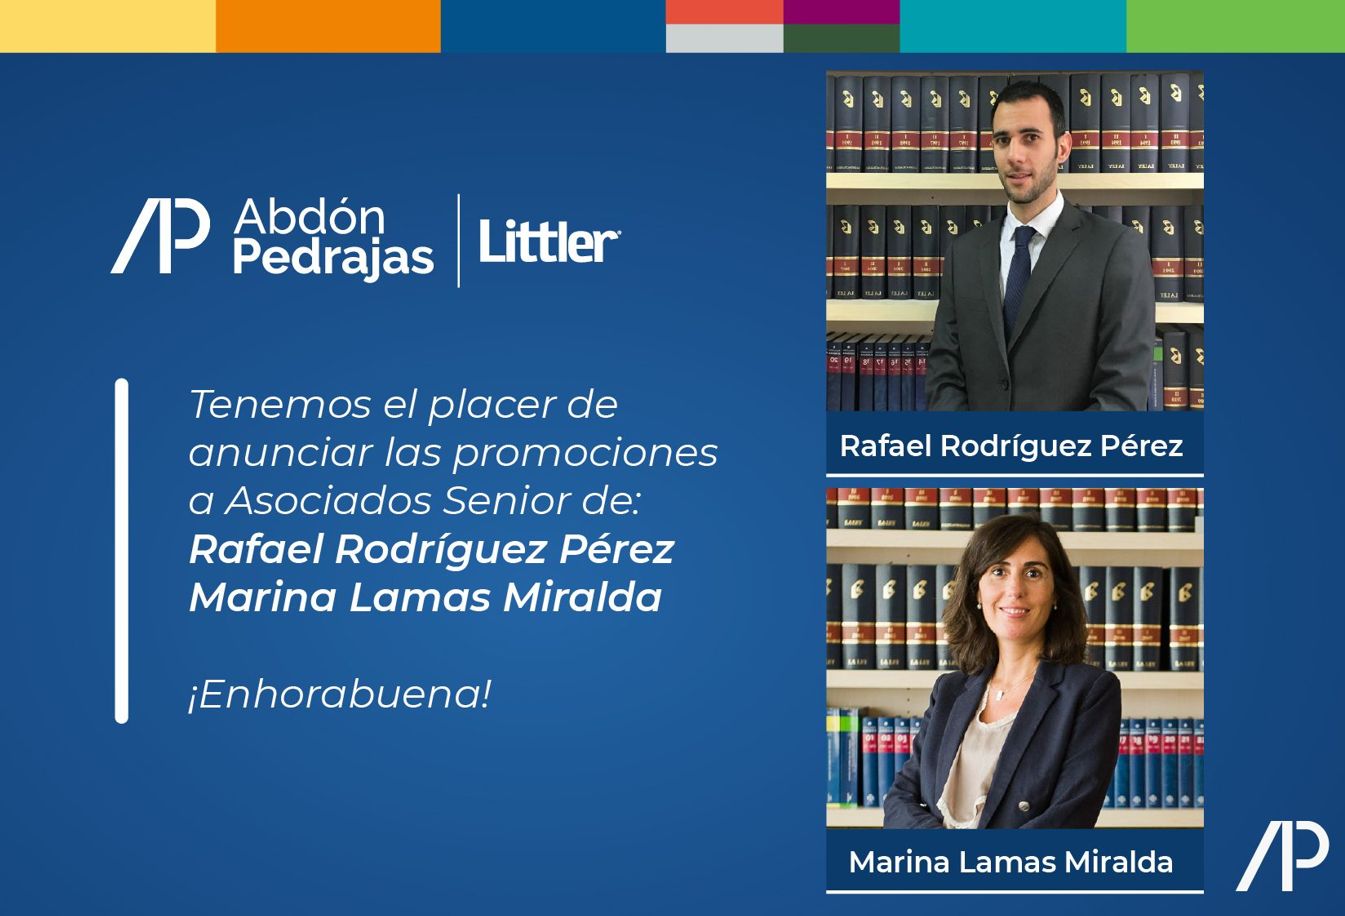 Marina Lamas Miralda y Rafael Rodríguez Pérez - Asociados Senior Abdón Pedrajas Littler